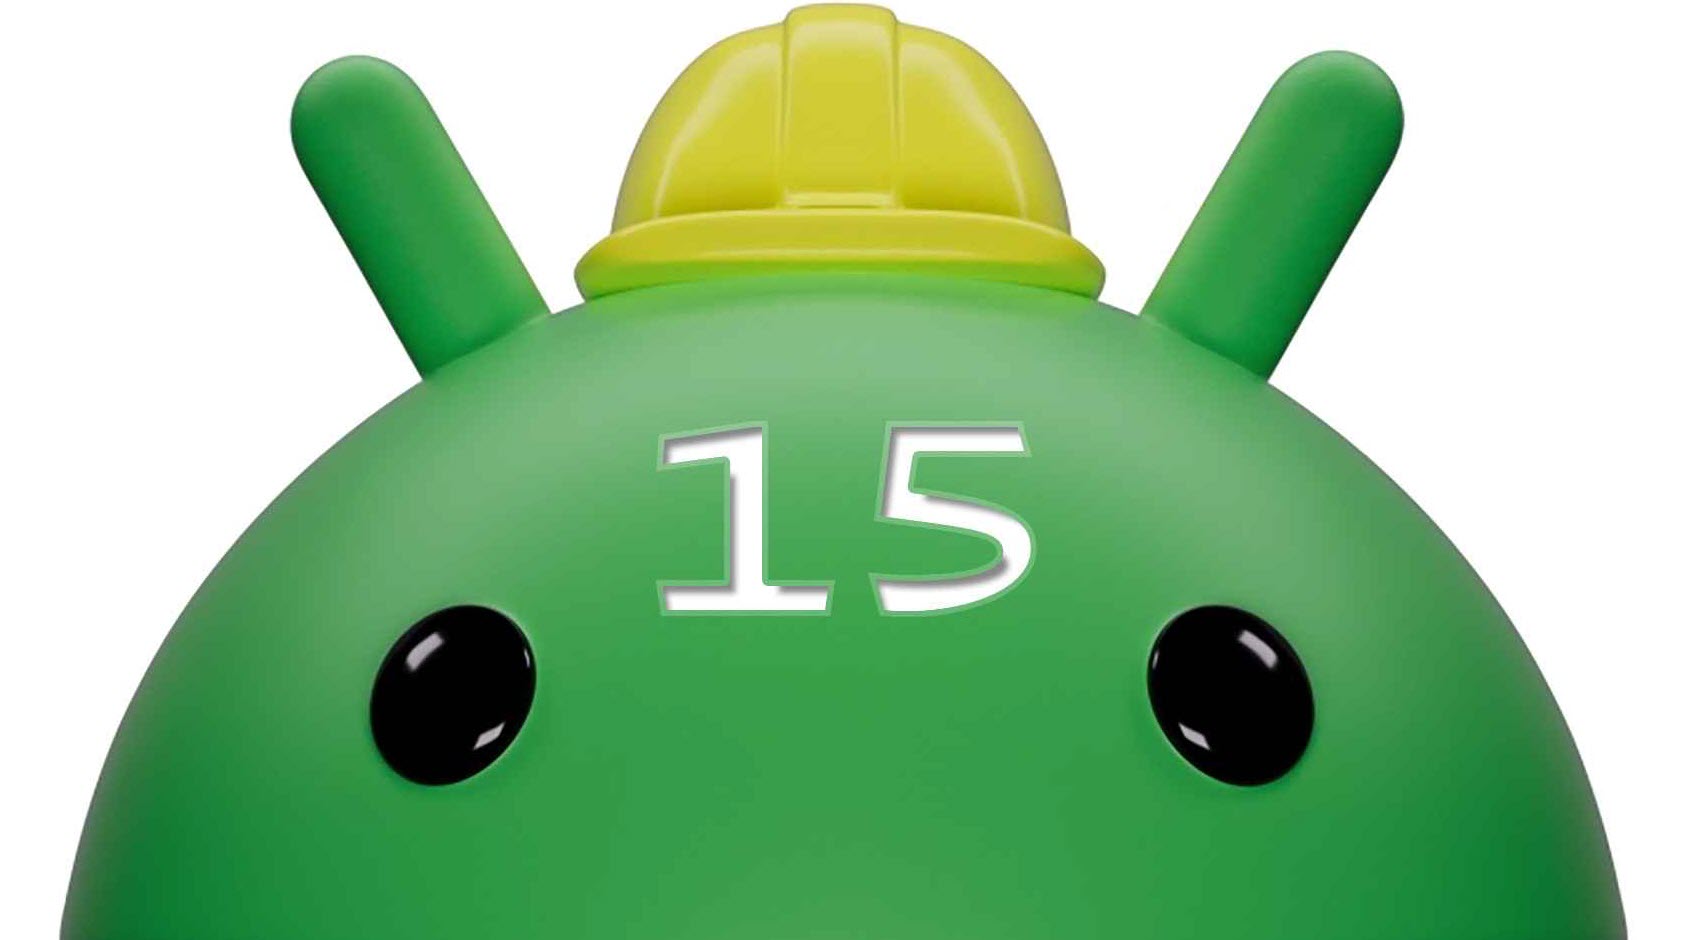 Android 15 Developer - 01